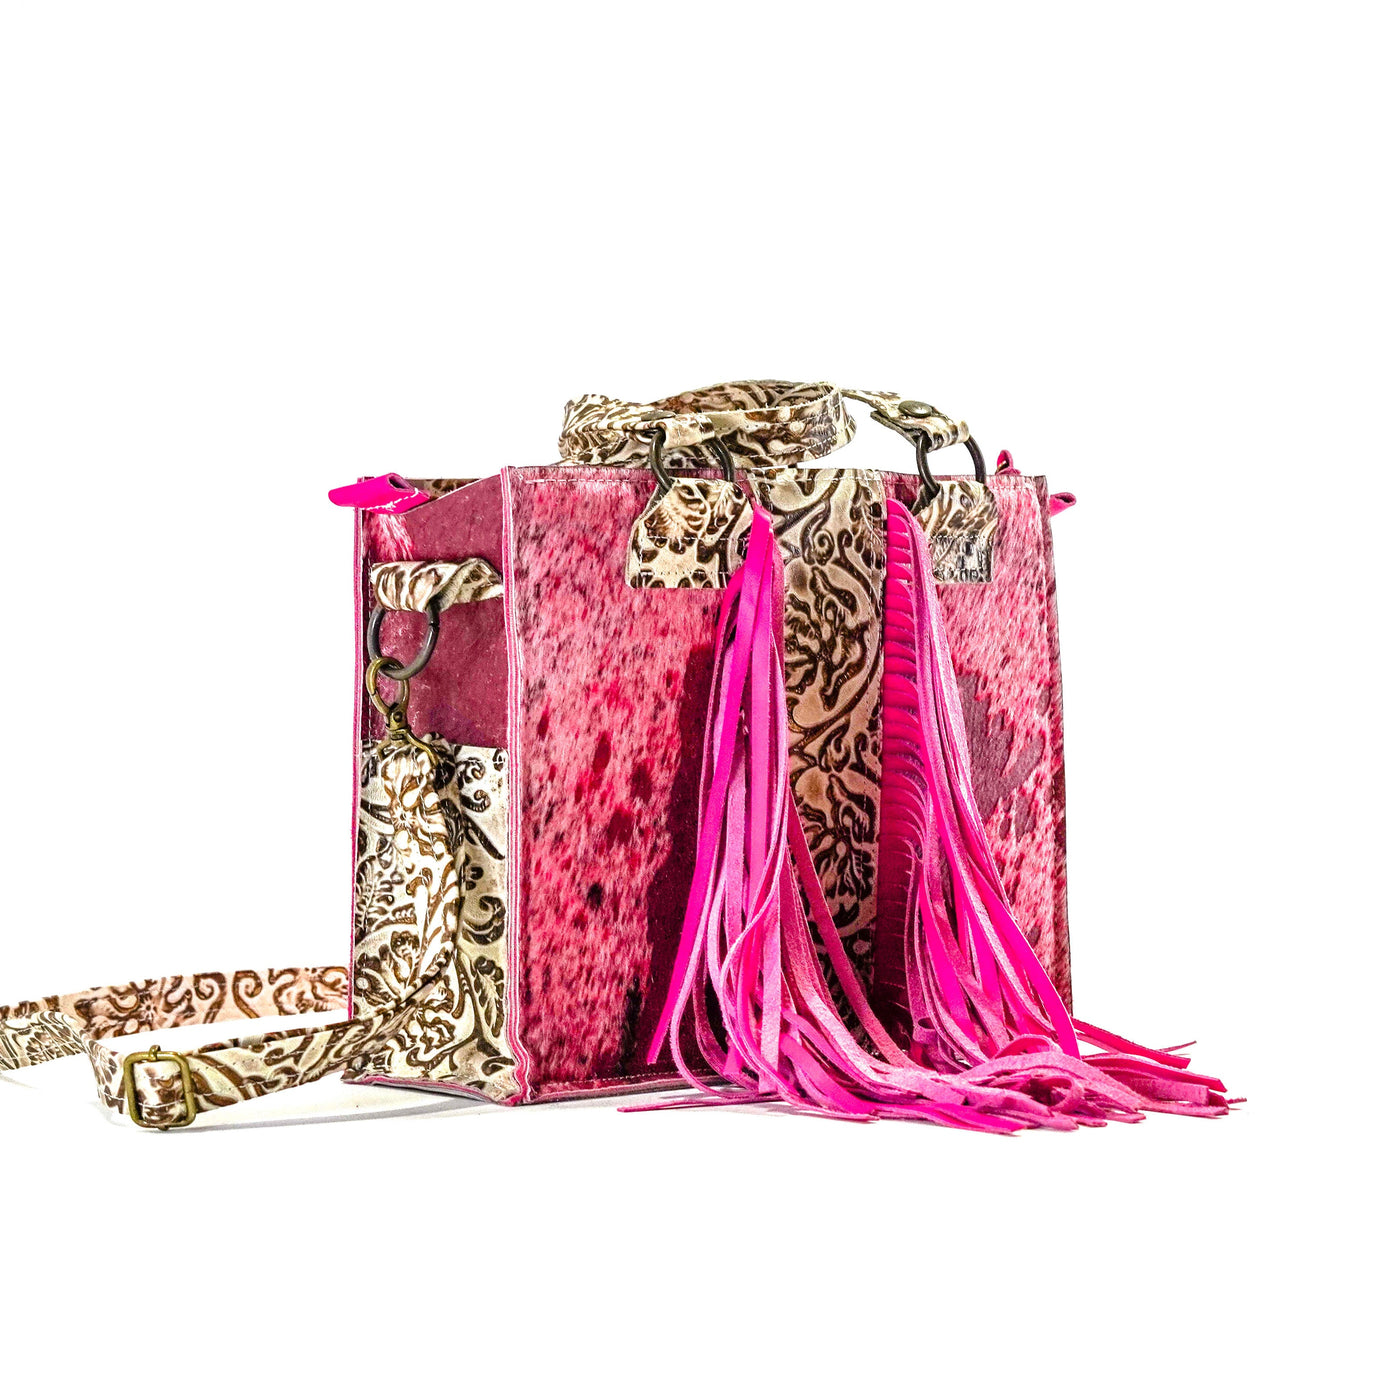 Minnie Pearl - Pink Acid w/ Ivory Tool-Minnie Pearl-Western-Cowhide-Bags-Handmade-Products-Gifts-Dancing Cactus Designs